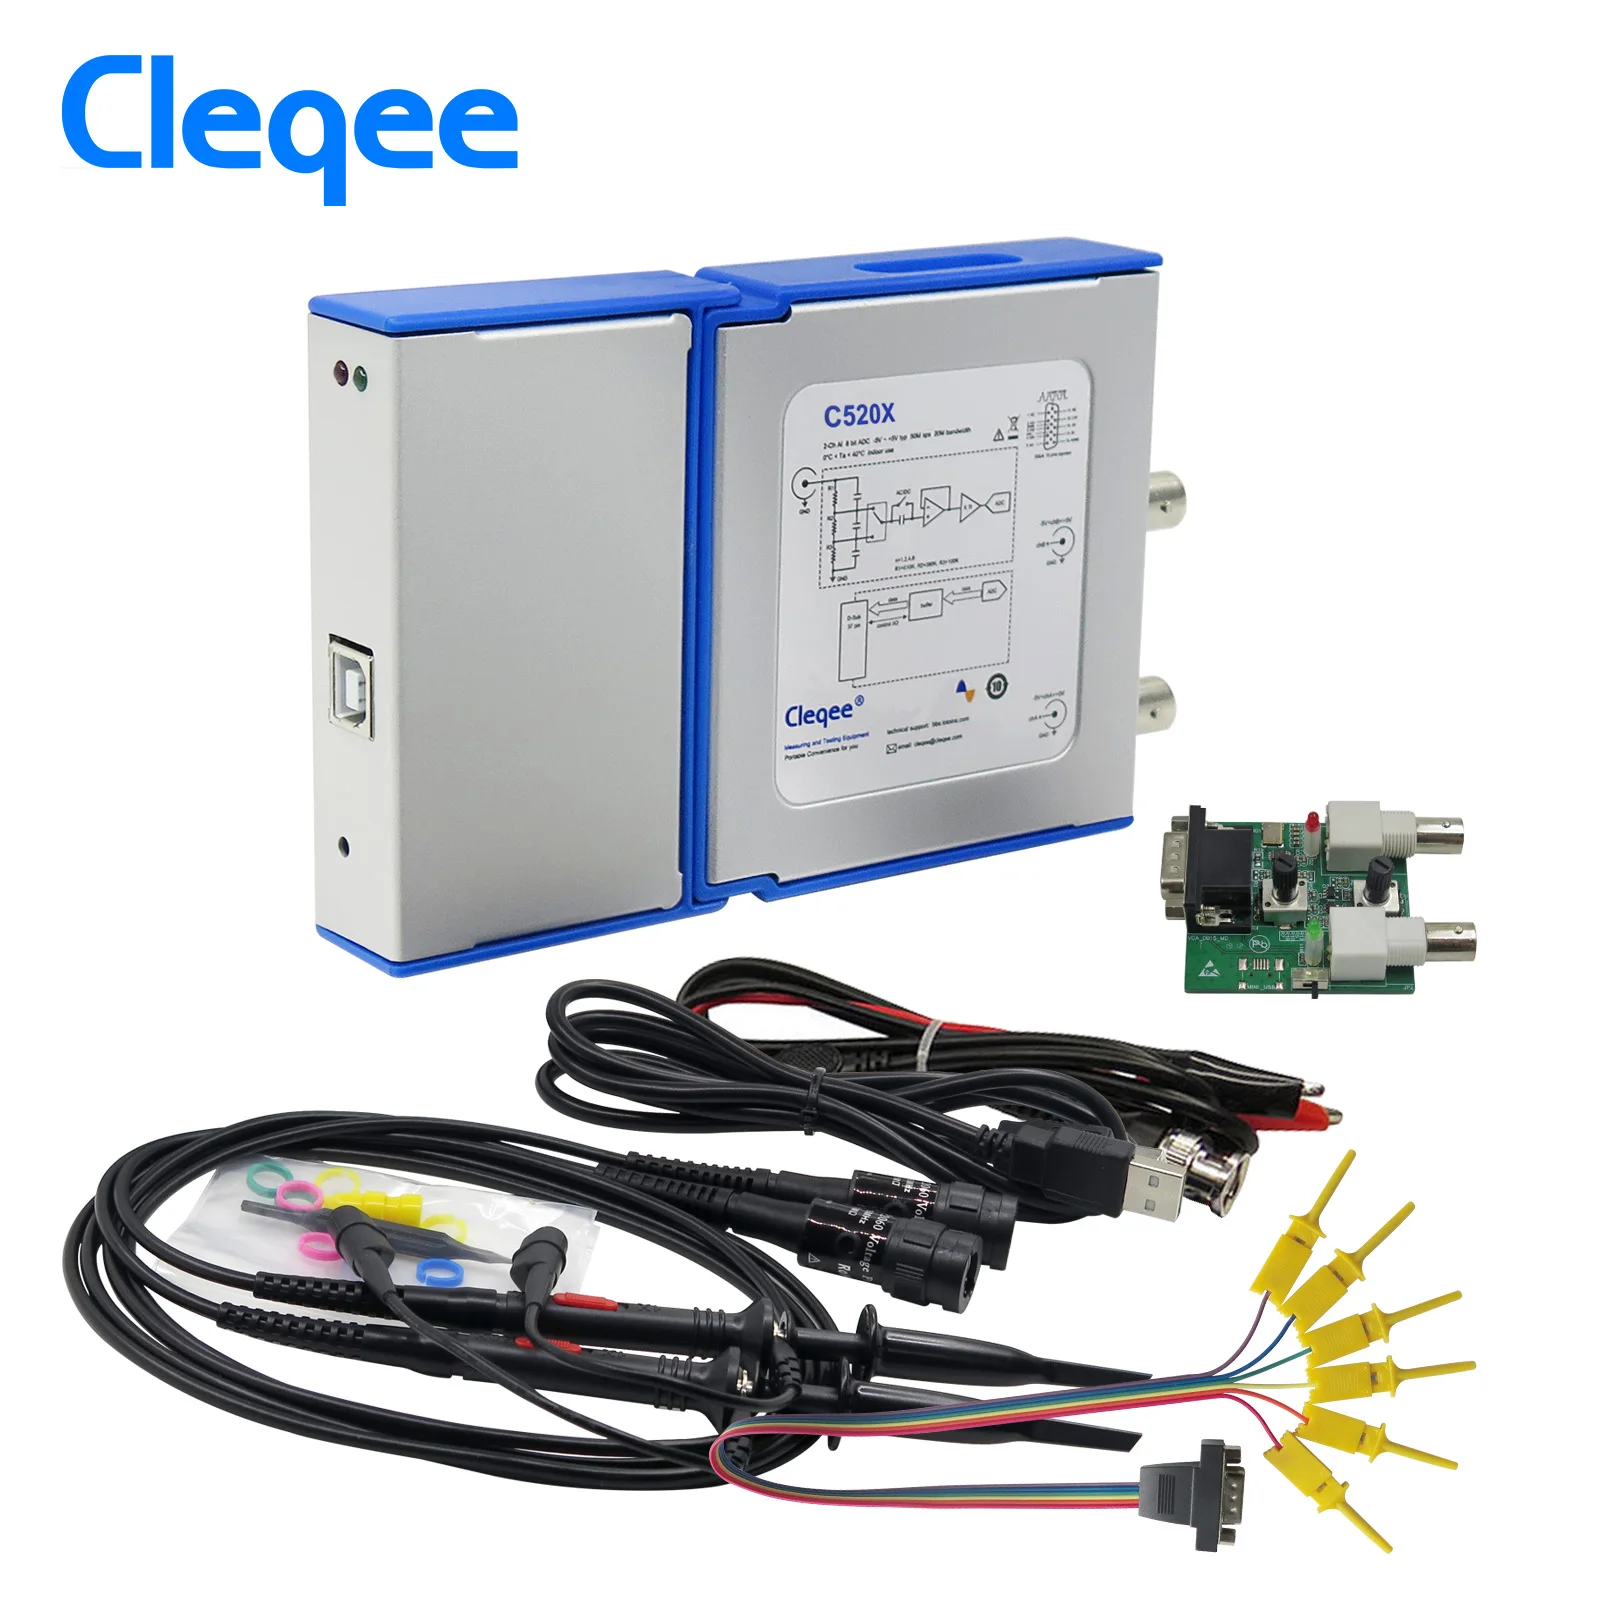 

Cleqee C520X PC Virtual Digital Handheld Oscilloscope 2 Channel Bandwidth 20Mhz Sampling data 50M with probe USB cable